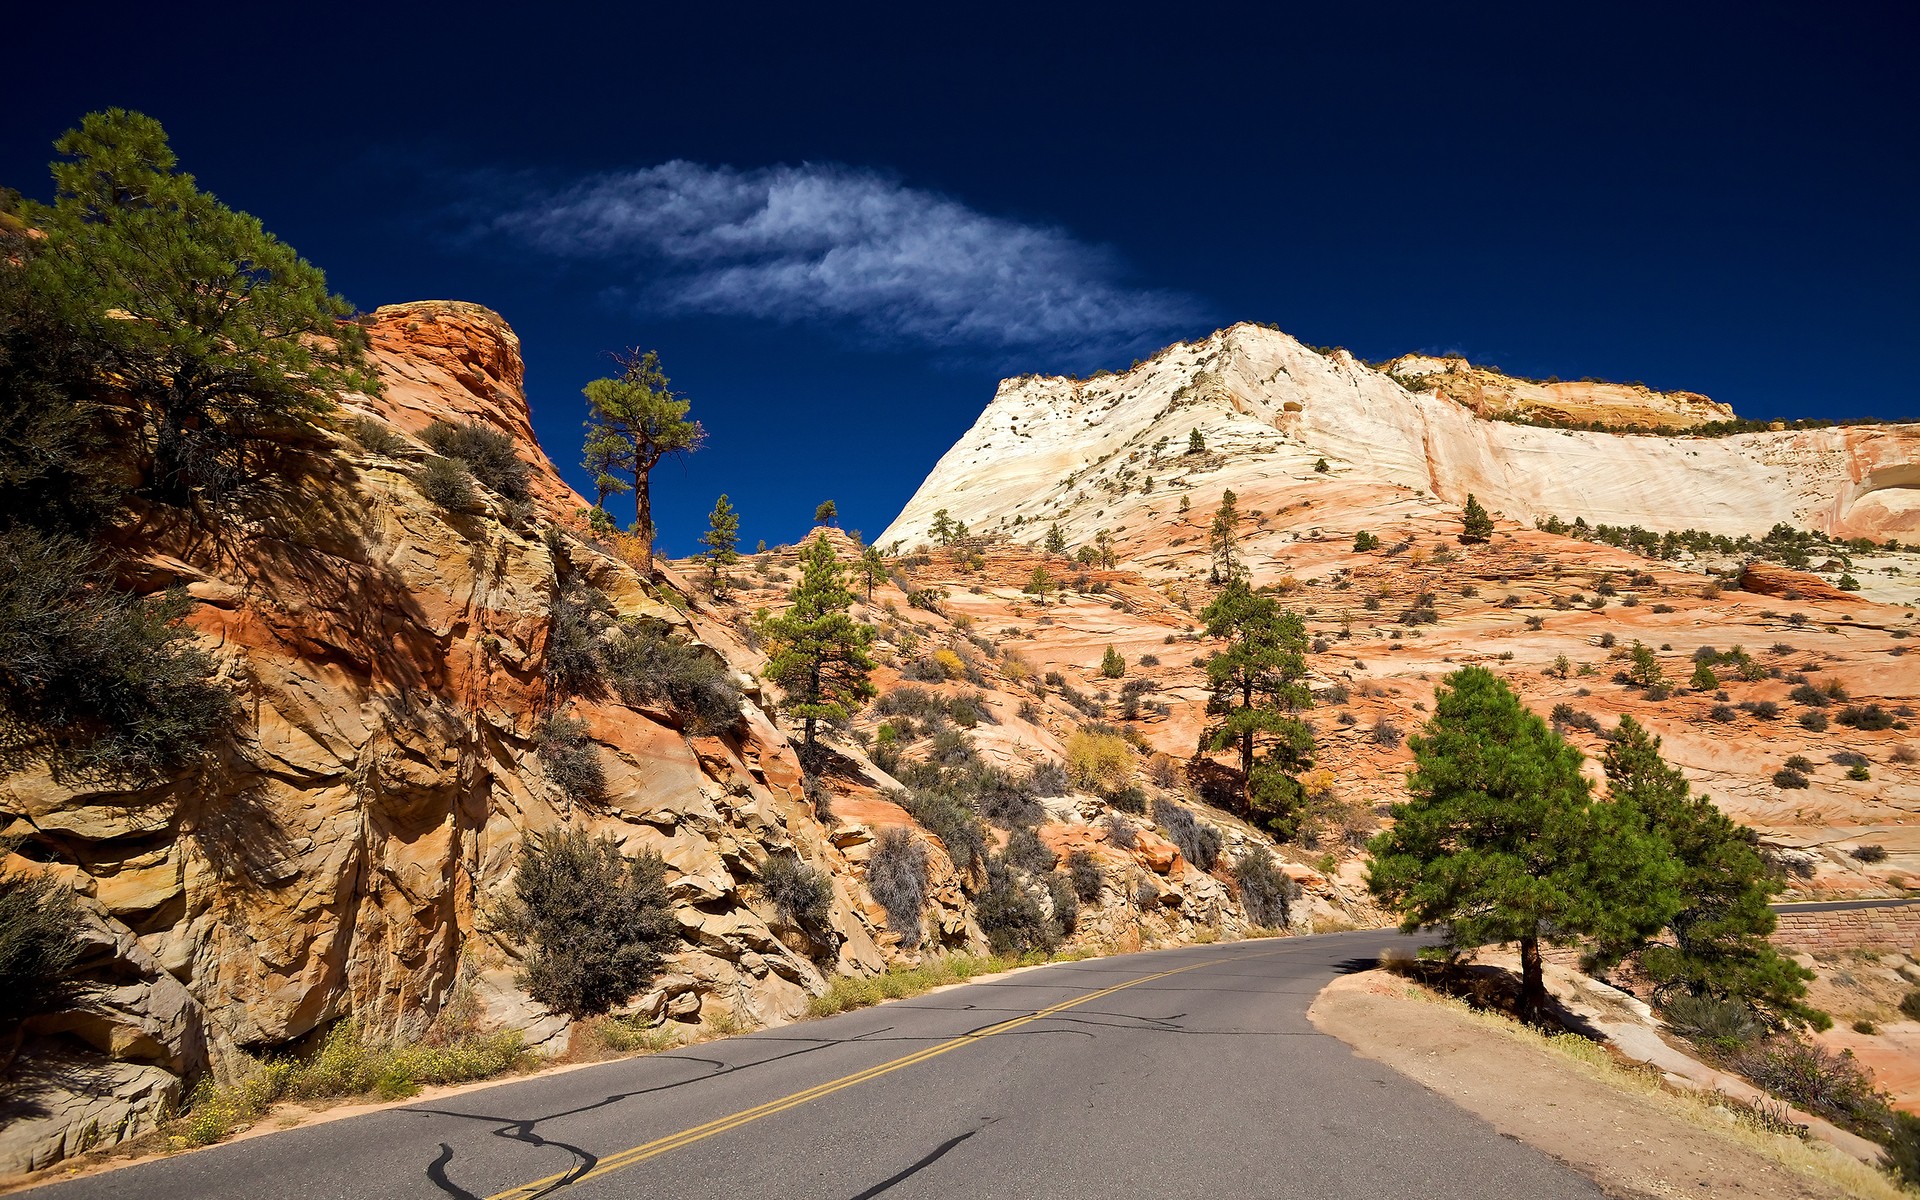  desert roads utah national park HD Wallpaper of Nature Landscapes